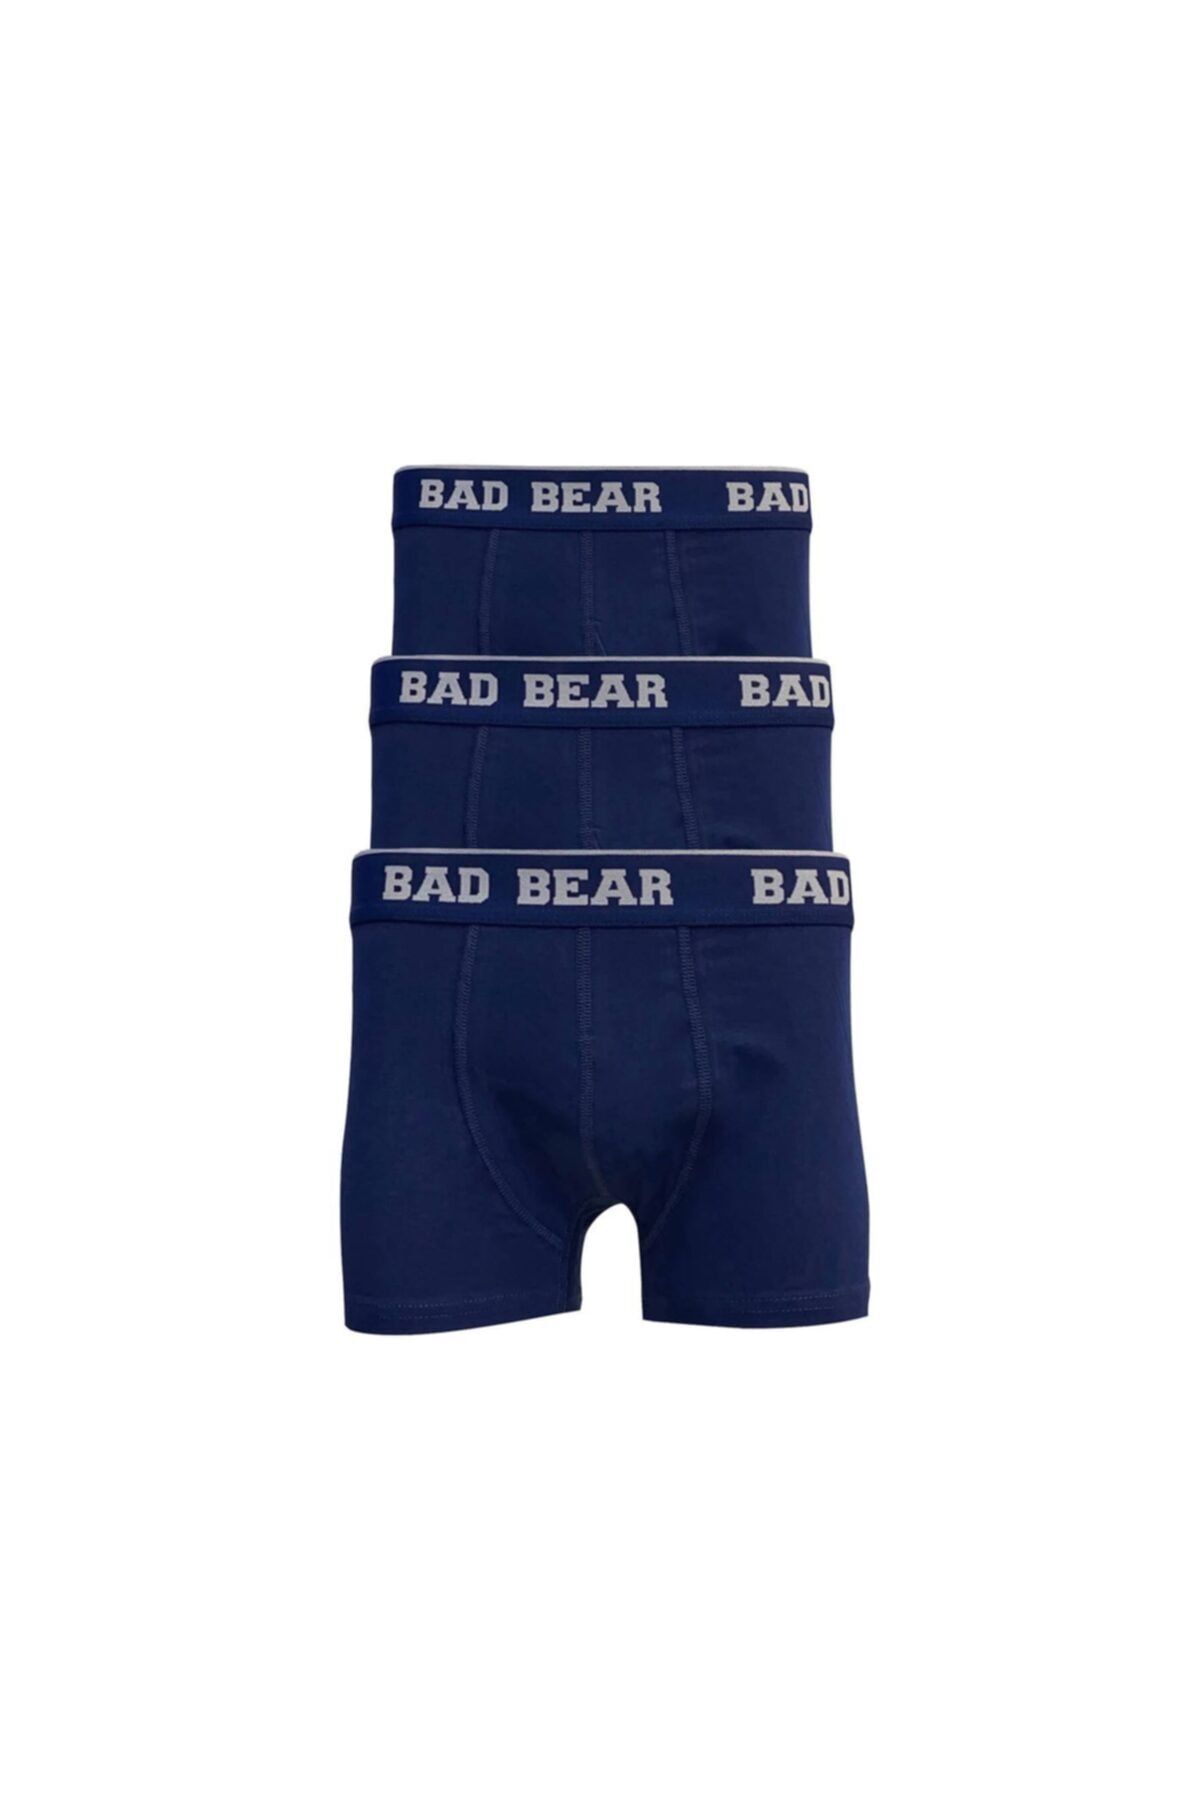 Bad Bear Basıc Boxer 3-pack Erkek 21.01.03.013-c07